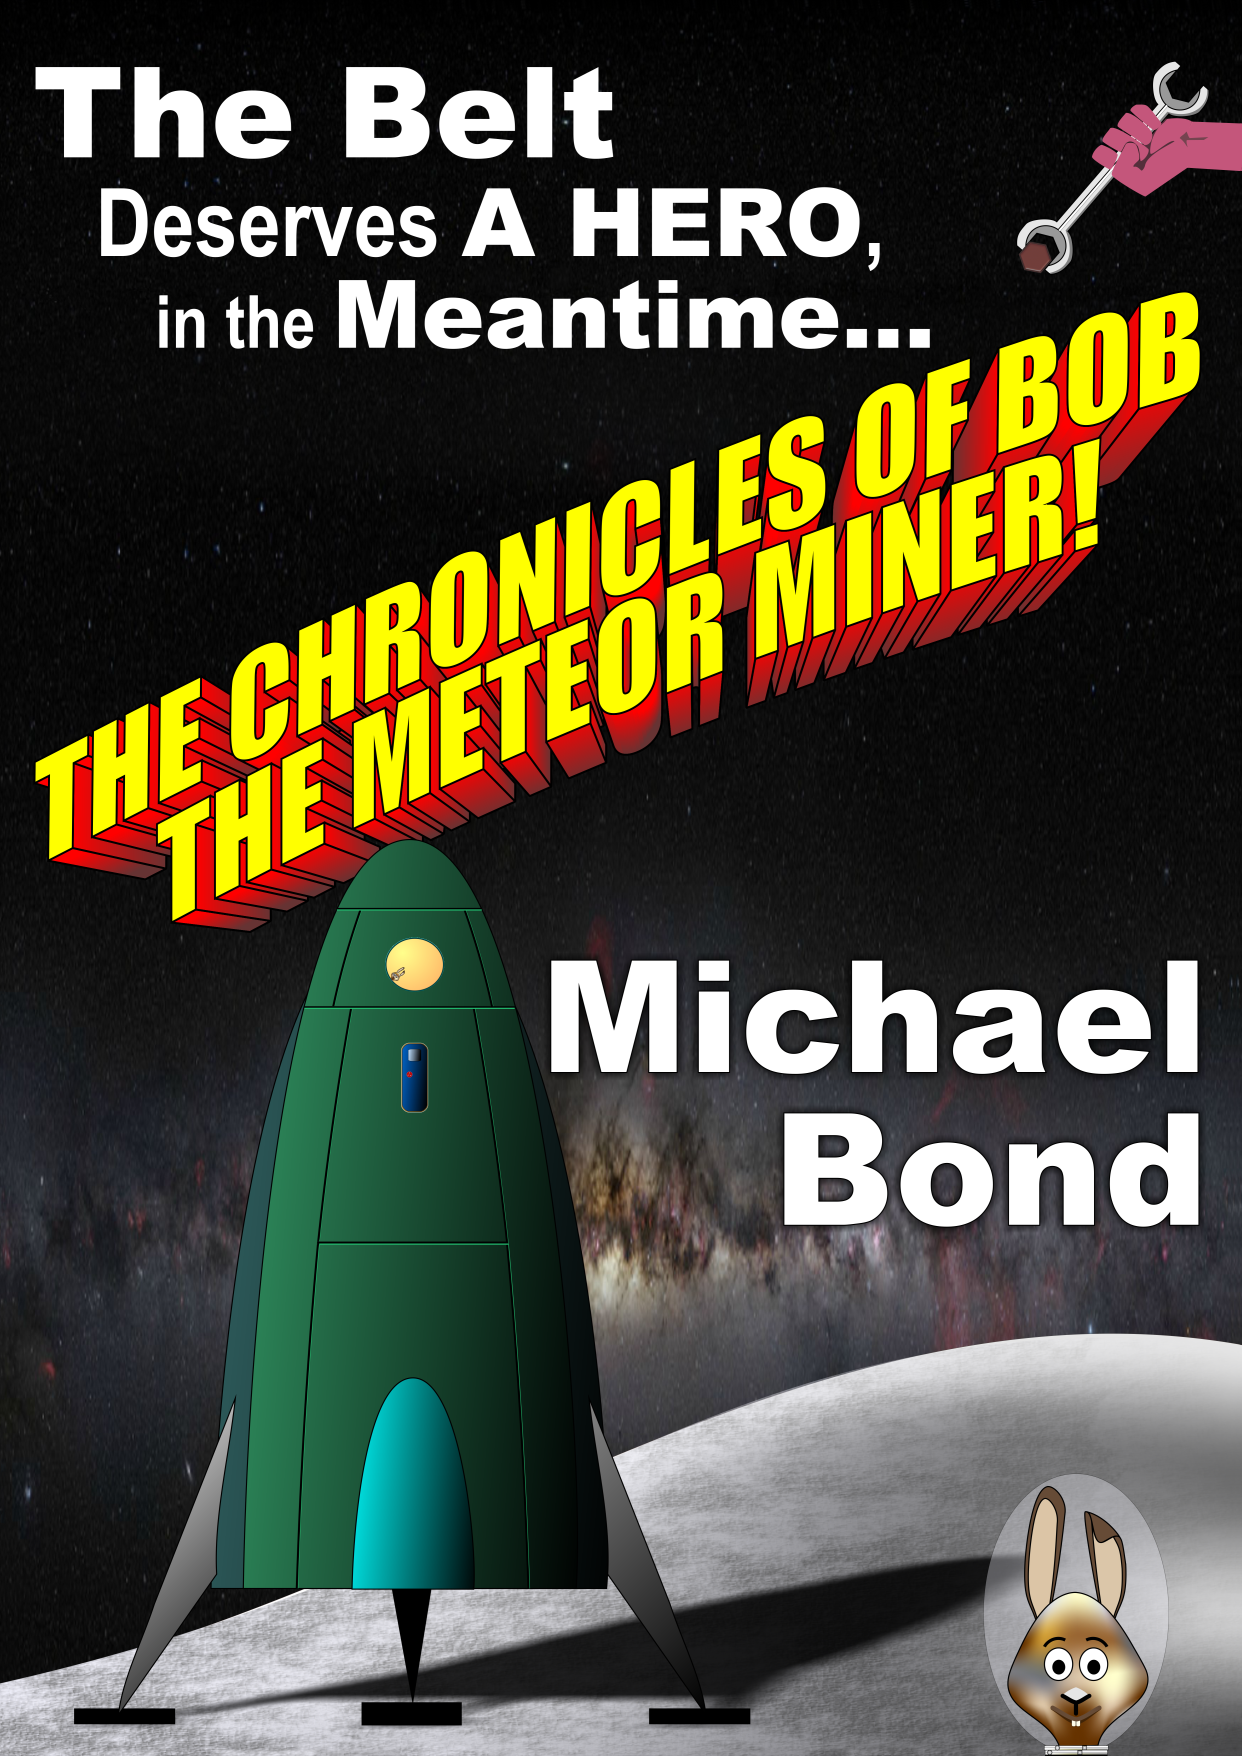 Bob The Meteor Miner